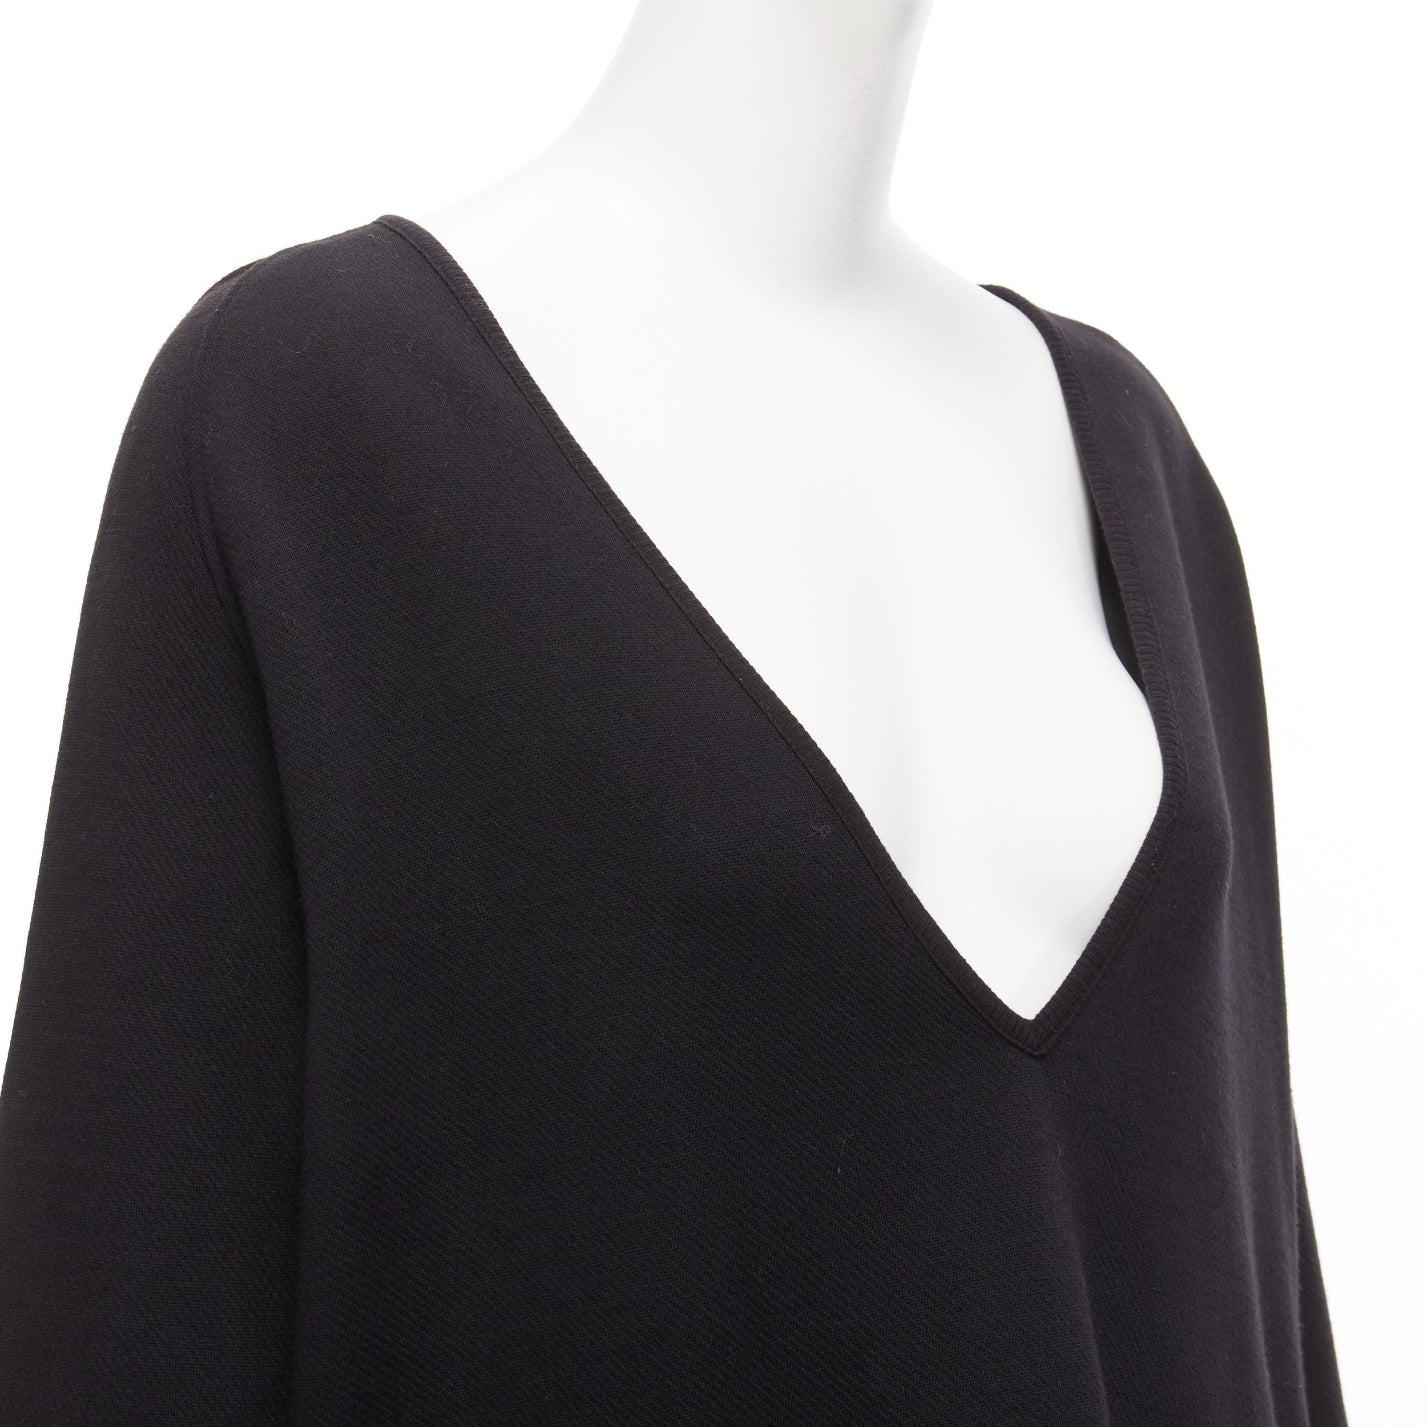 DRIES VAN NOTEN black cotton wool blend pocketed V-neck patch pocket zip dress S For Sale 3